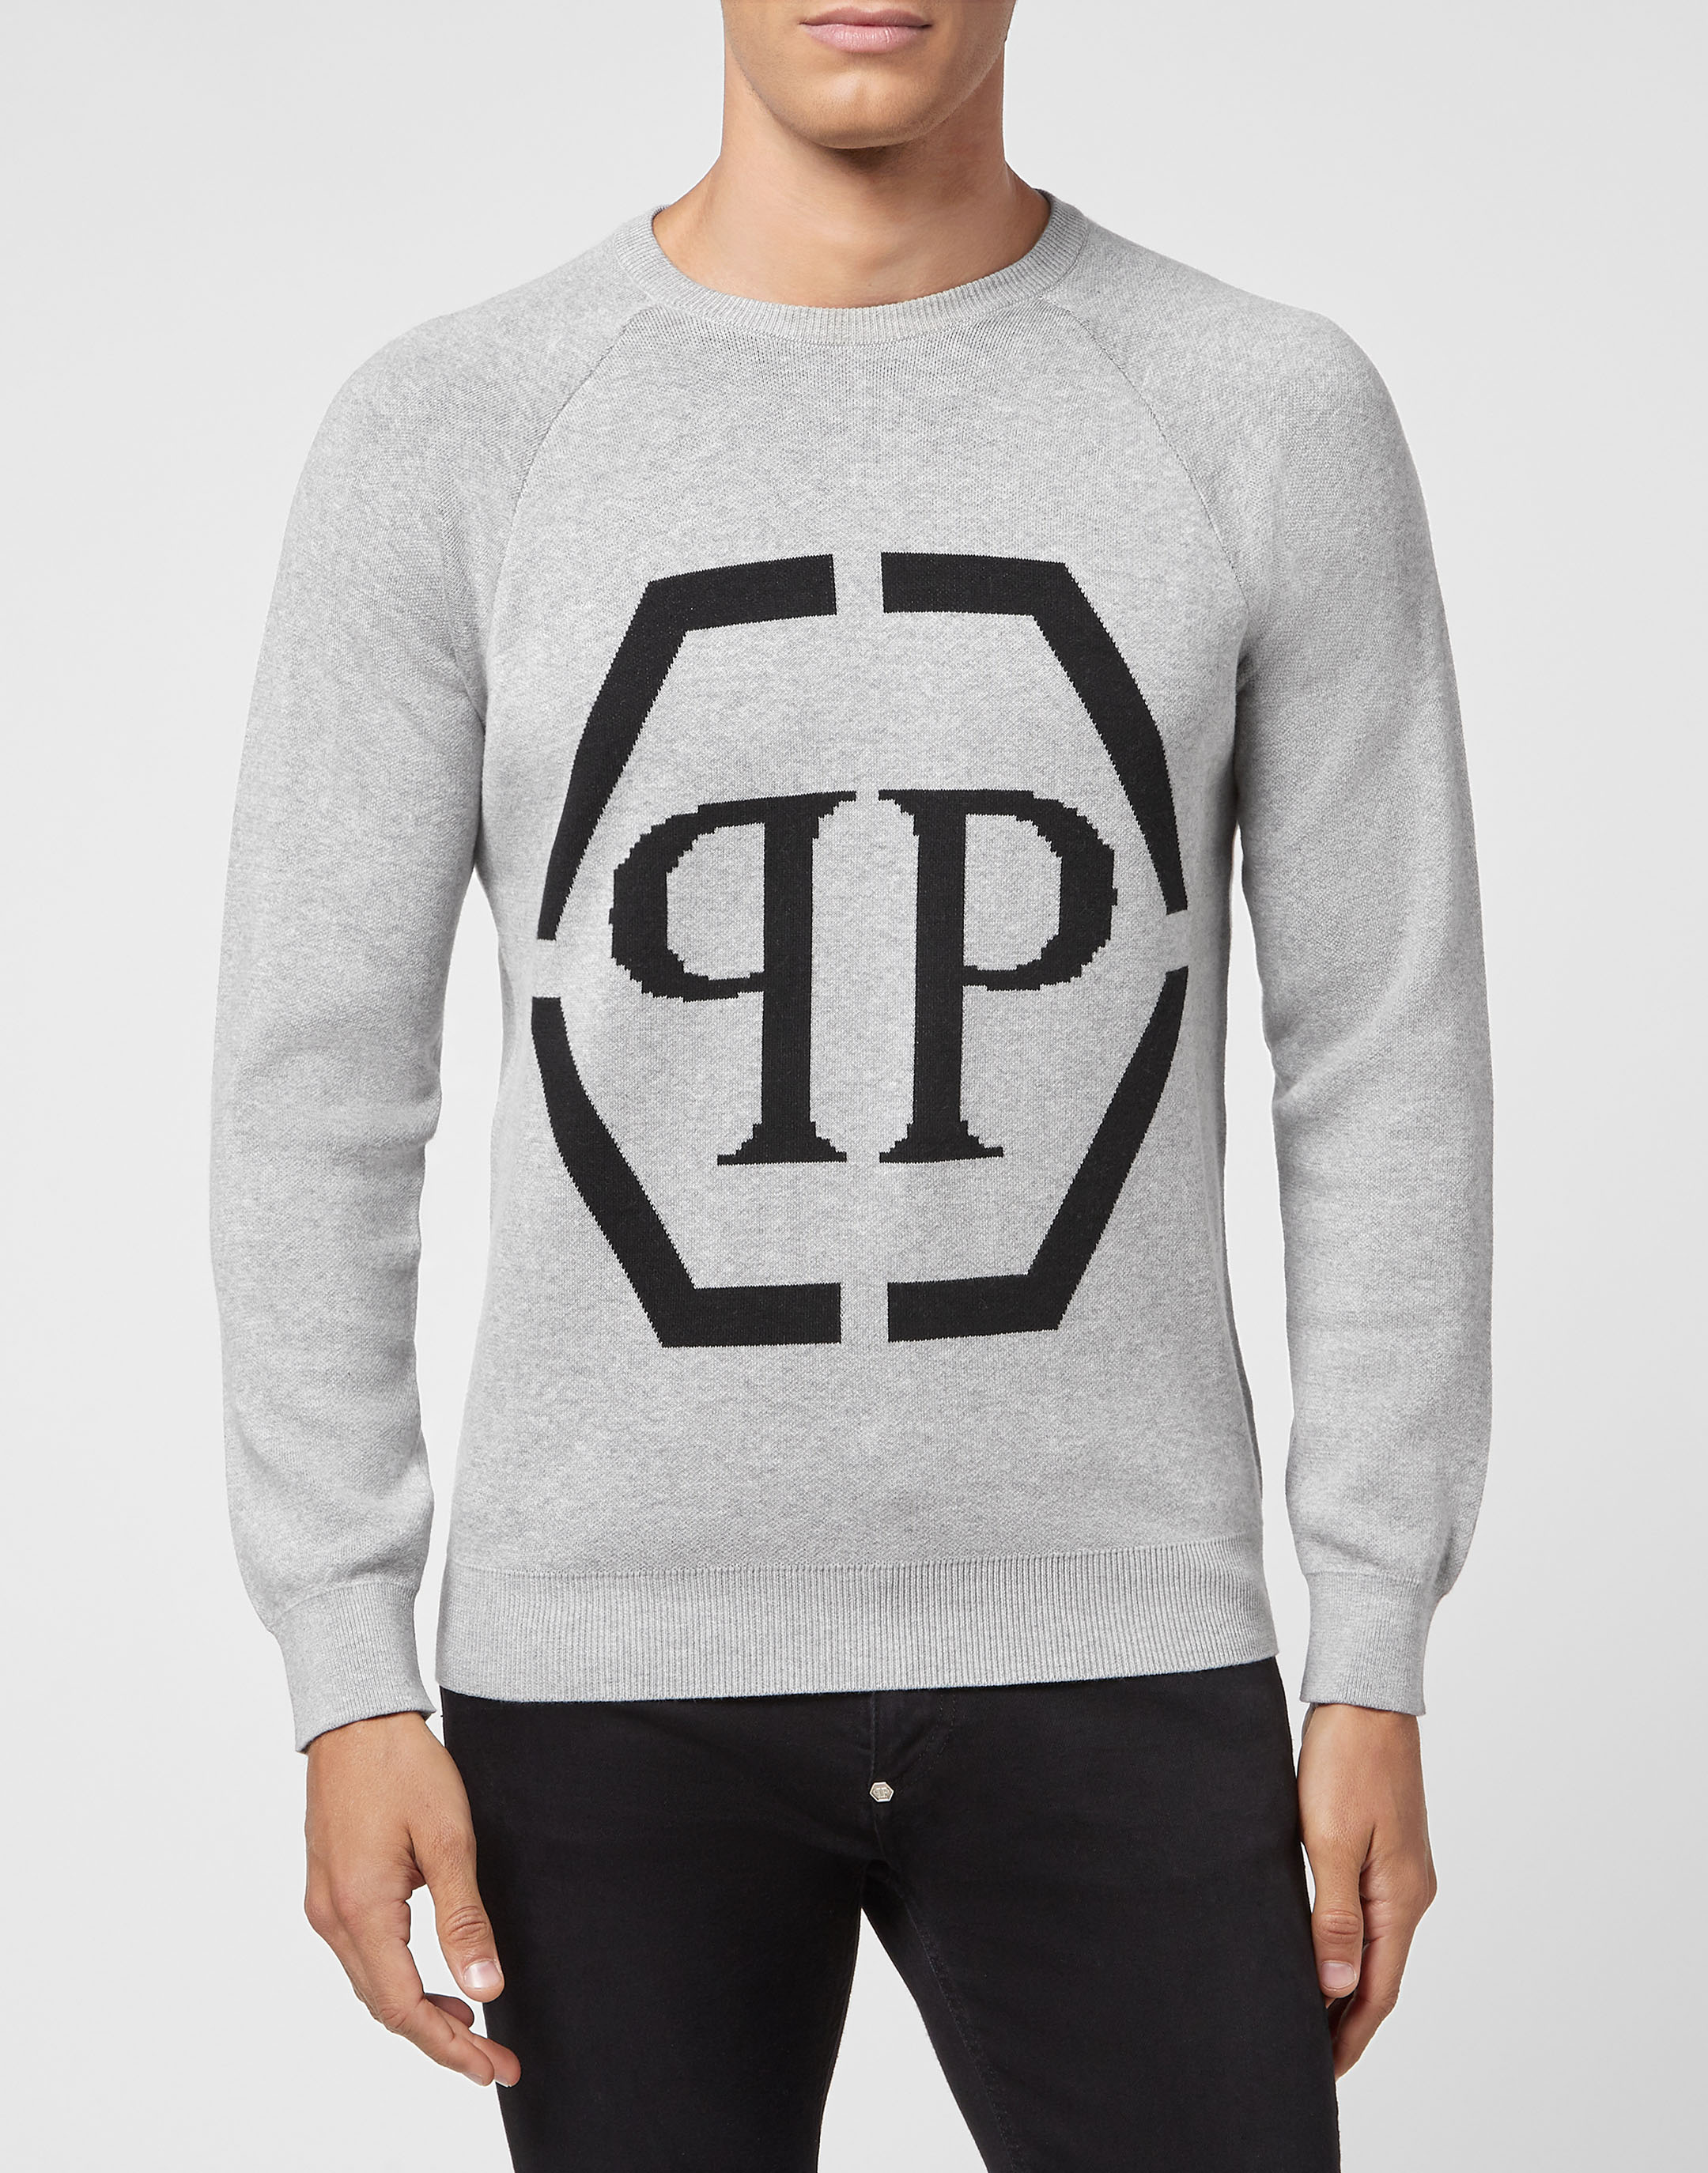 Philipp Plein logo-print cotton sweatshirt - Black